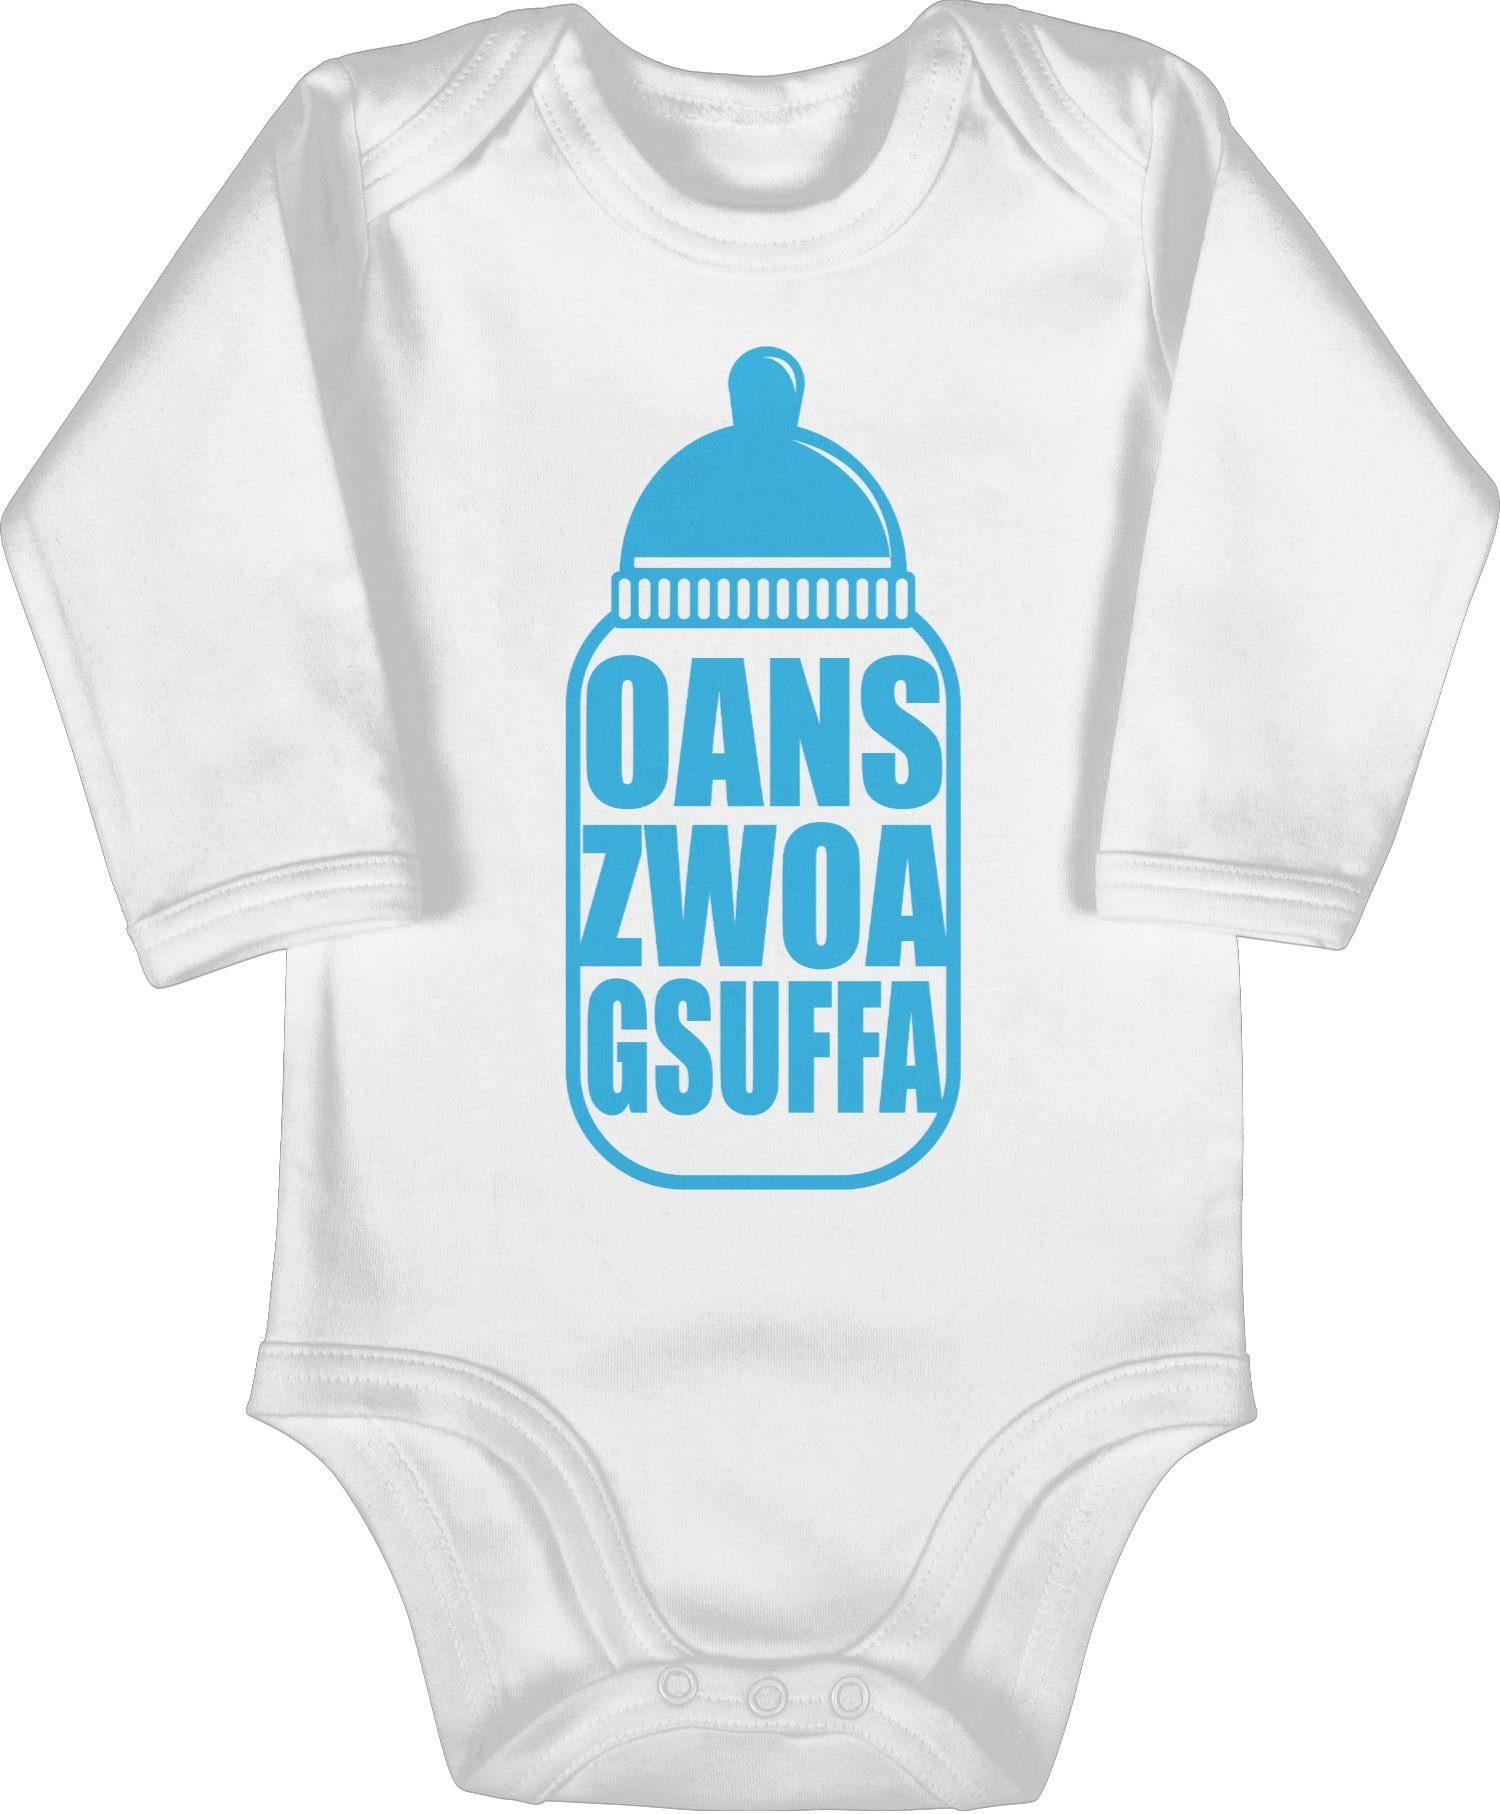 Shirtracer Shirtbody Babyflasche Oans Gsuffa 2 Zwoa Baby Weiß Oktoberfest Outfit für Mode blau